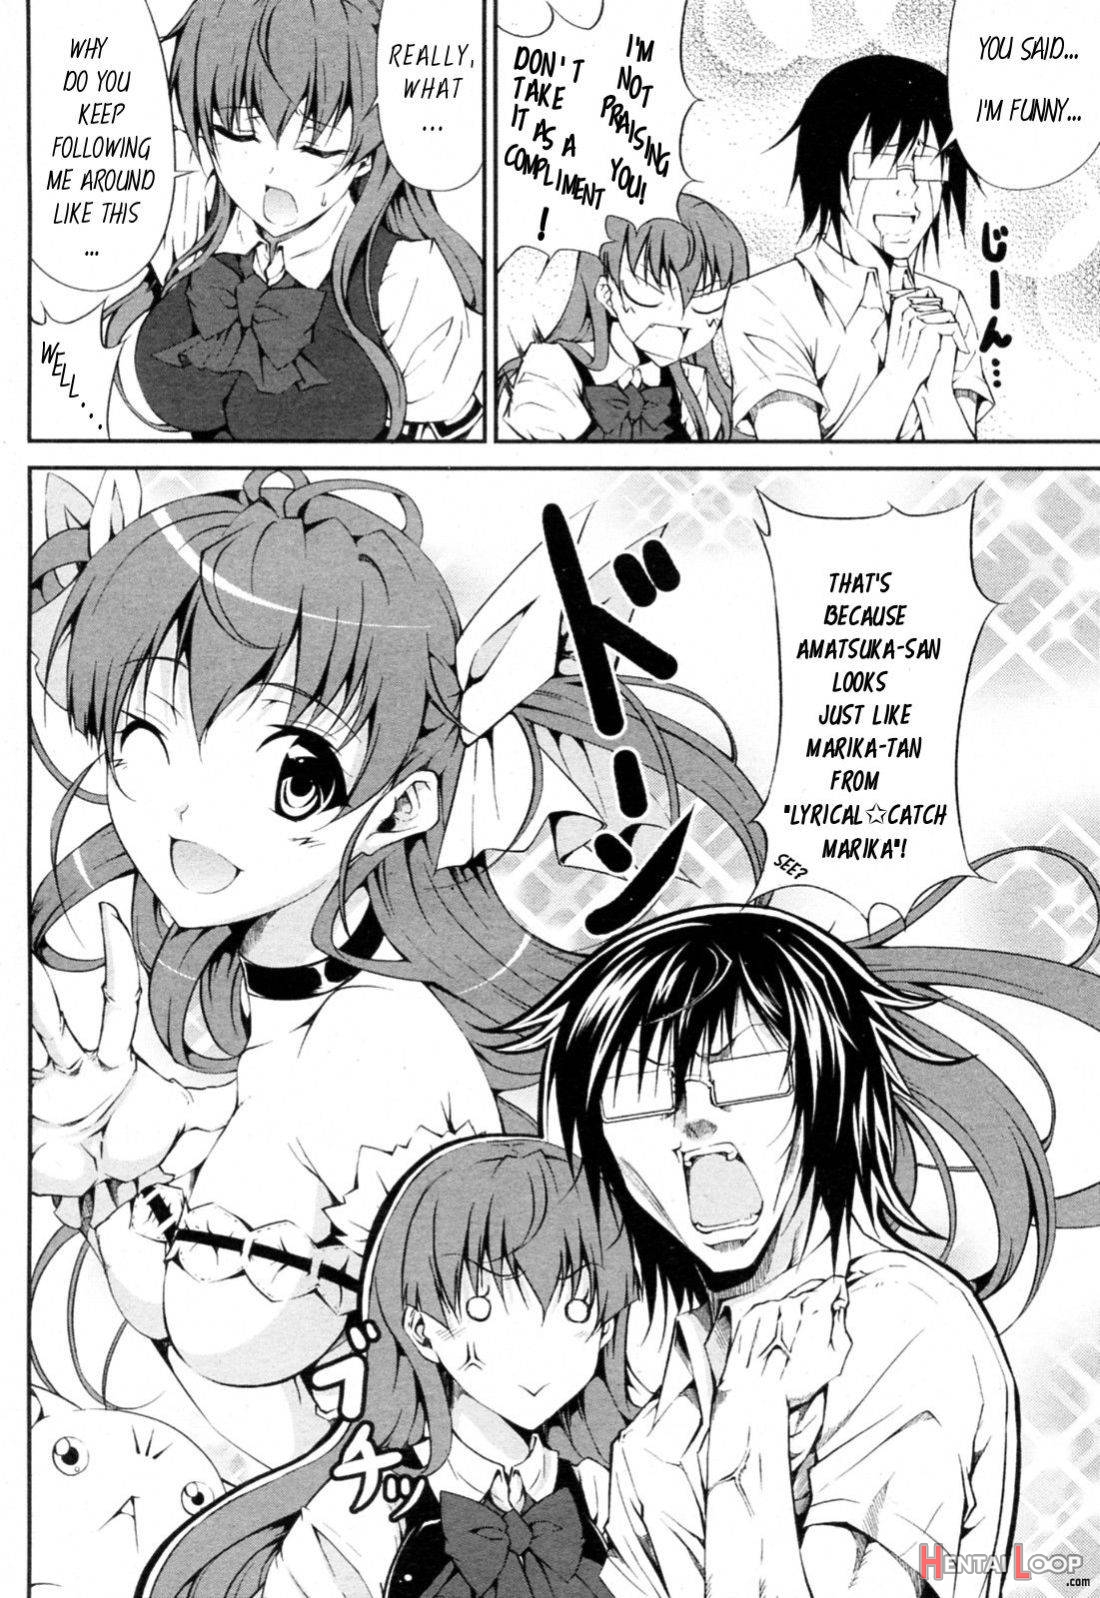 Tsundere-san to Otaku-chan page 4